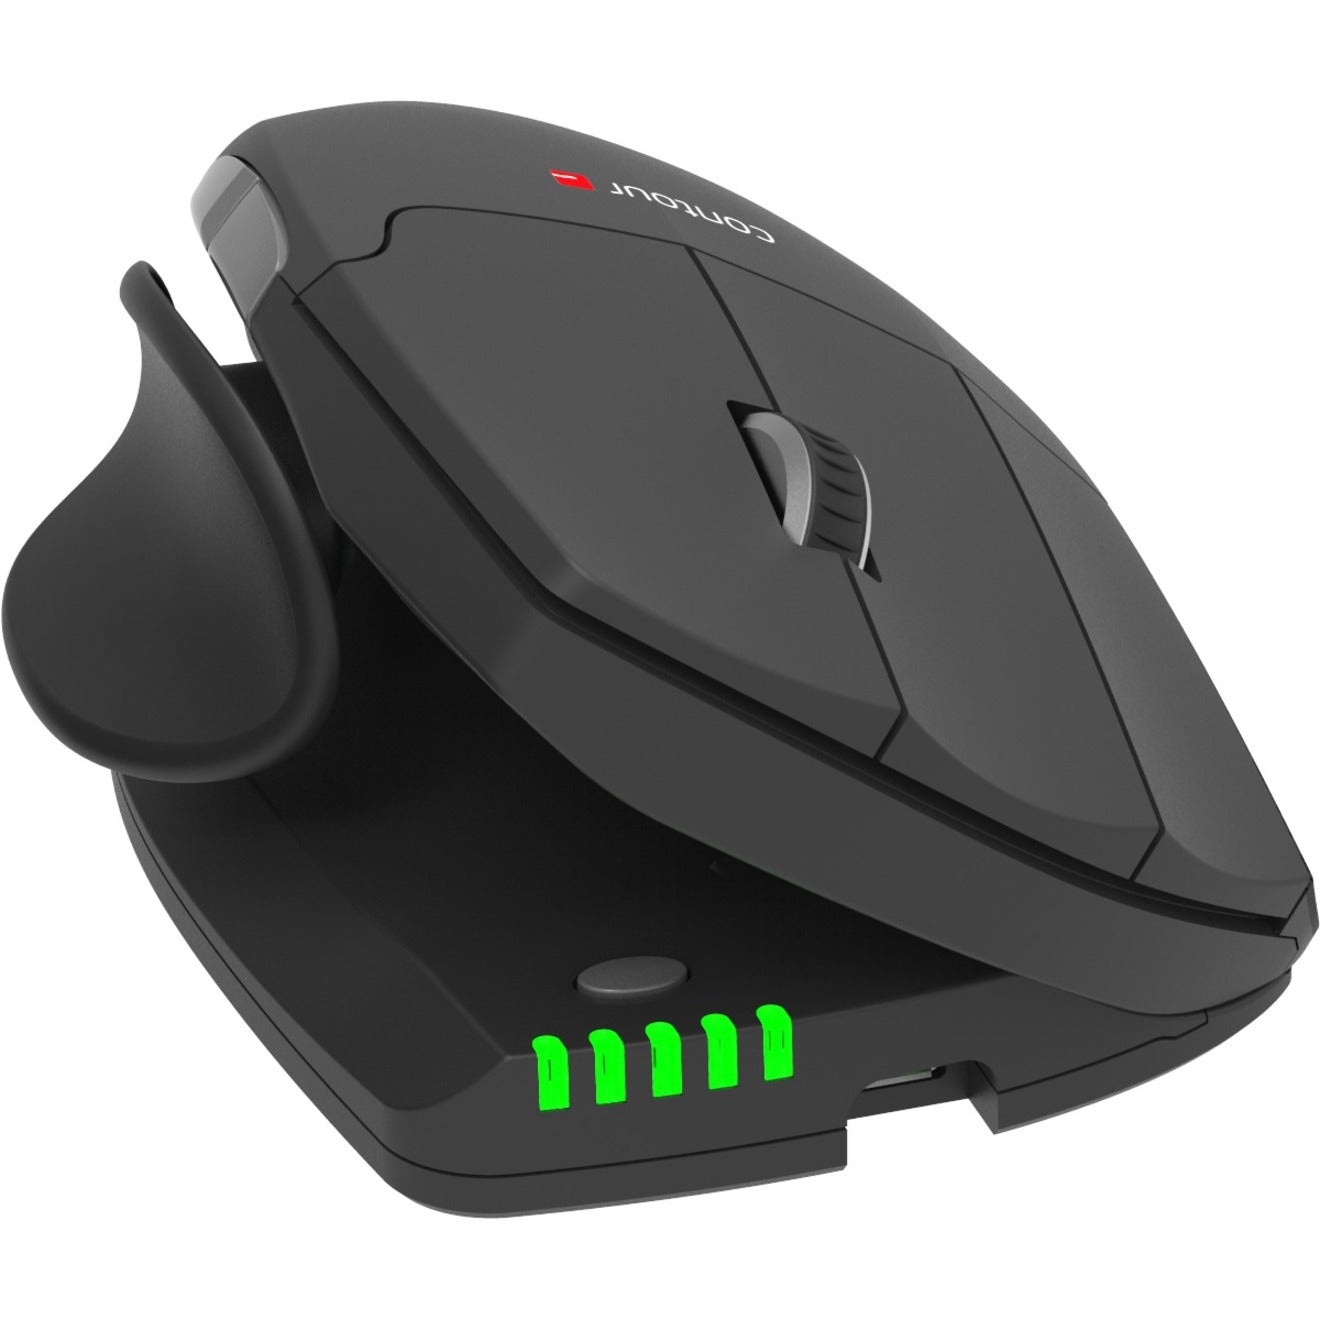 Contour UNIMOUSE-L-WL Unimouse Mouse, Ergonomic Left-Handed Wireless Scroll Wheel, 2800 dpi